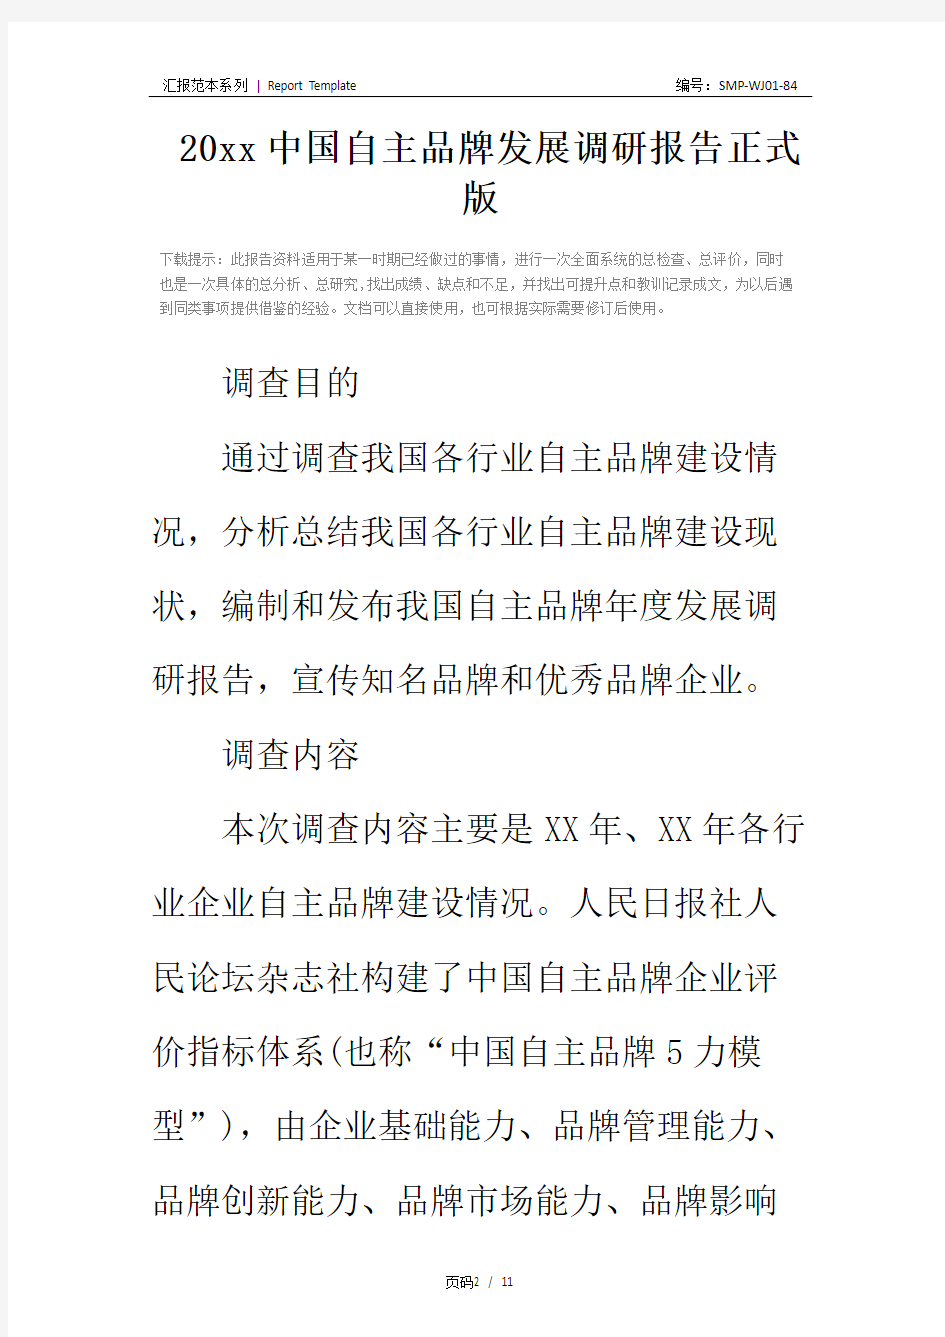 20xx中国自主品牌发展调研报告正式版